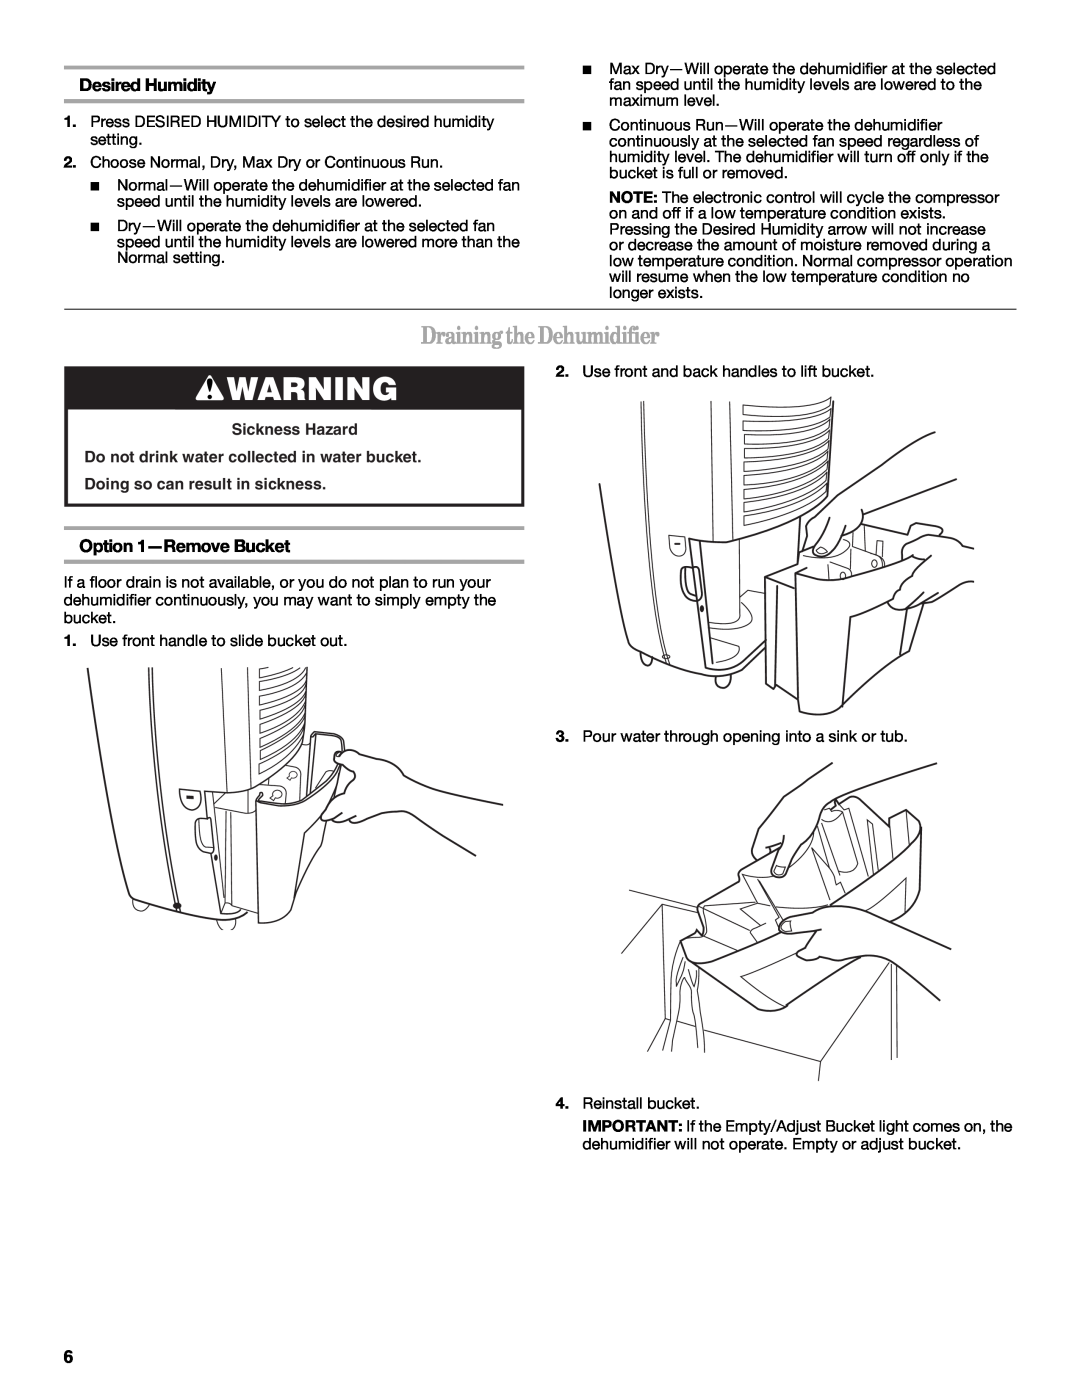 Whirlpool AD35DSS1 manual DrainingtheDehumidifier, Desired Humidity, Option 1-RemoveBucket, Sickness Hazard 